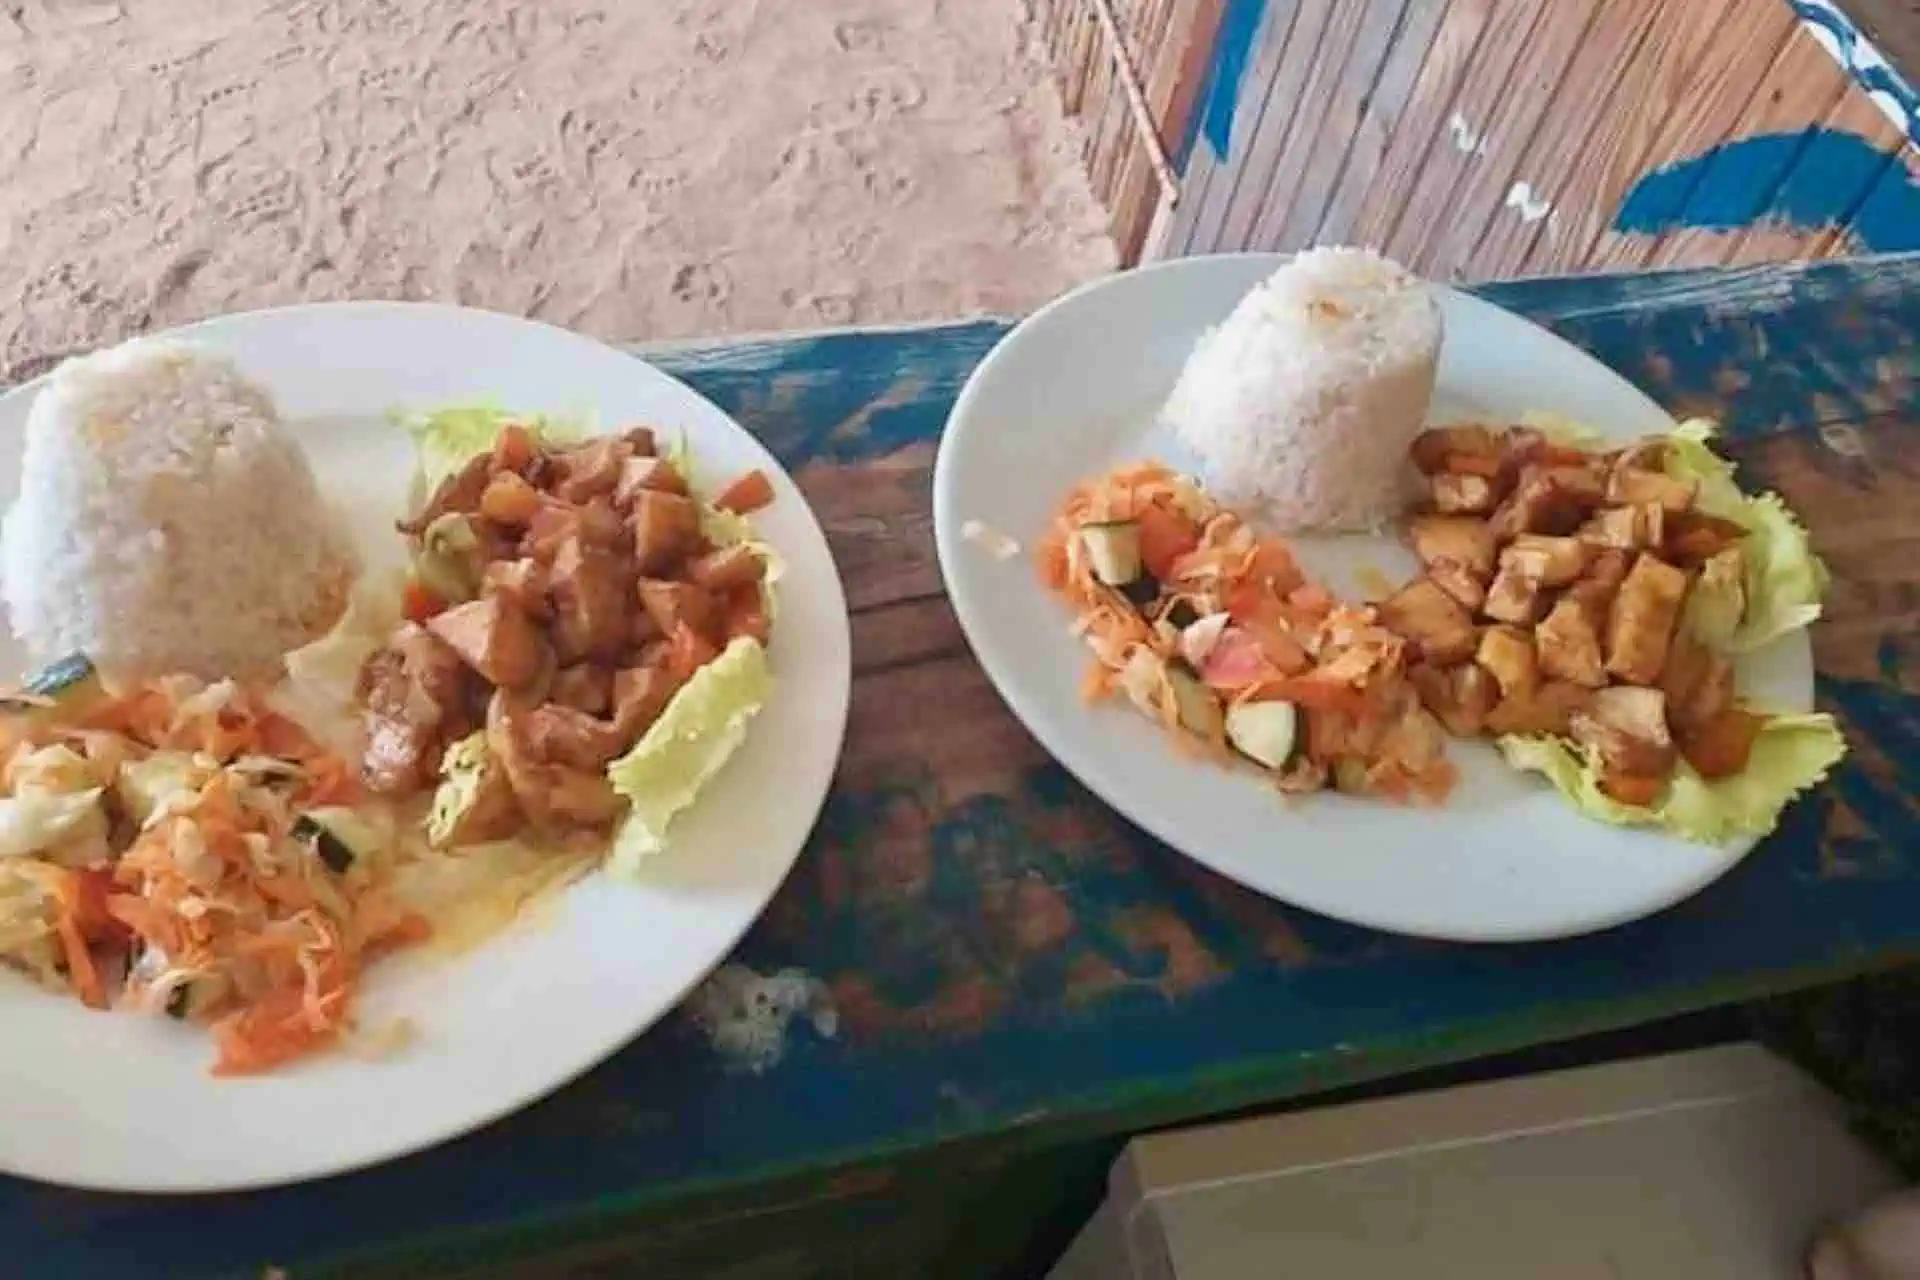 Isla Eneida San Blas lunch plates with fish and rice